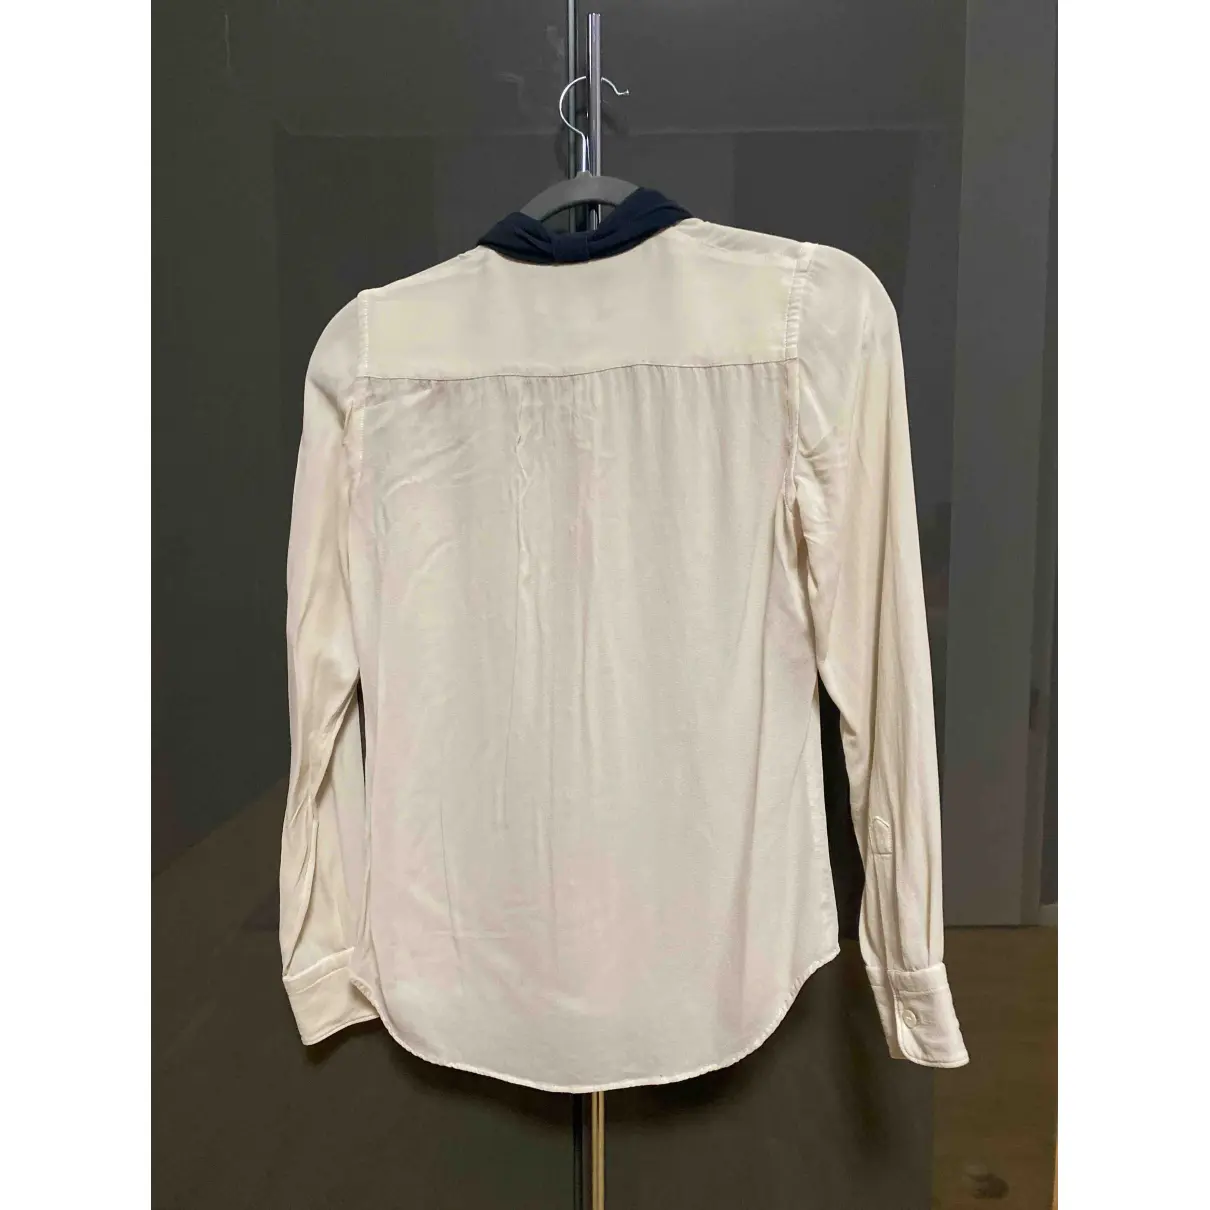 Buy Moschino Silk blouse online